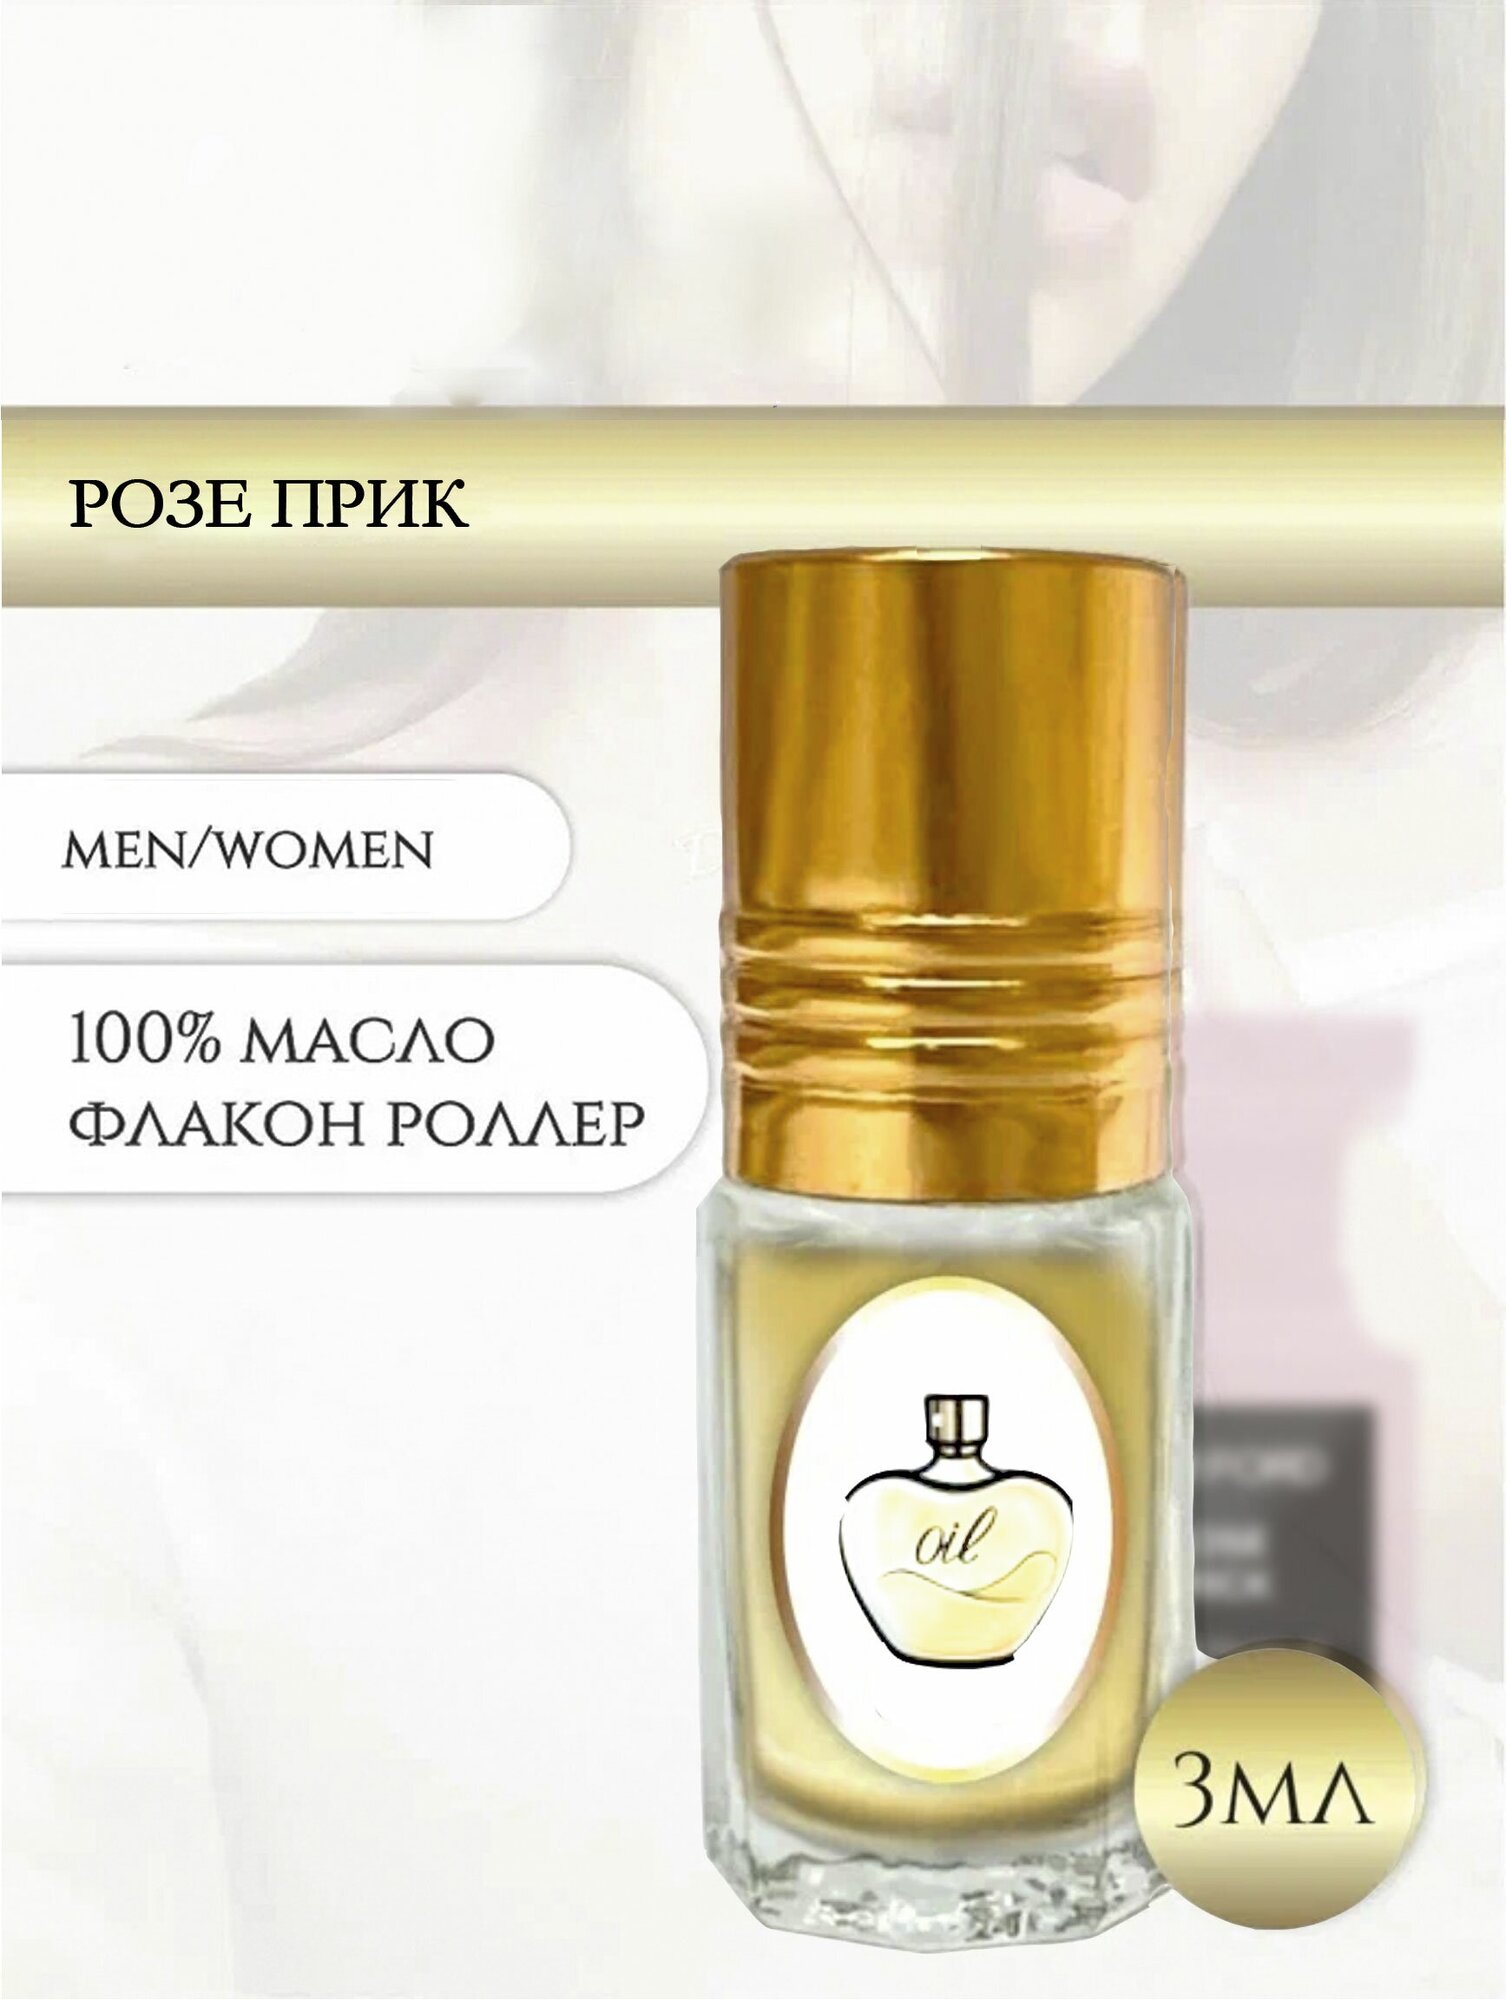 Aromat Oil Духи женские/мужские Розе Прик